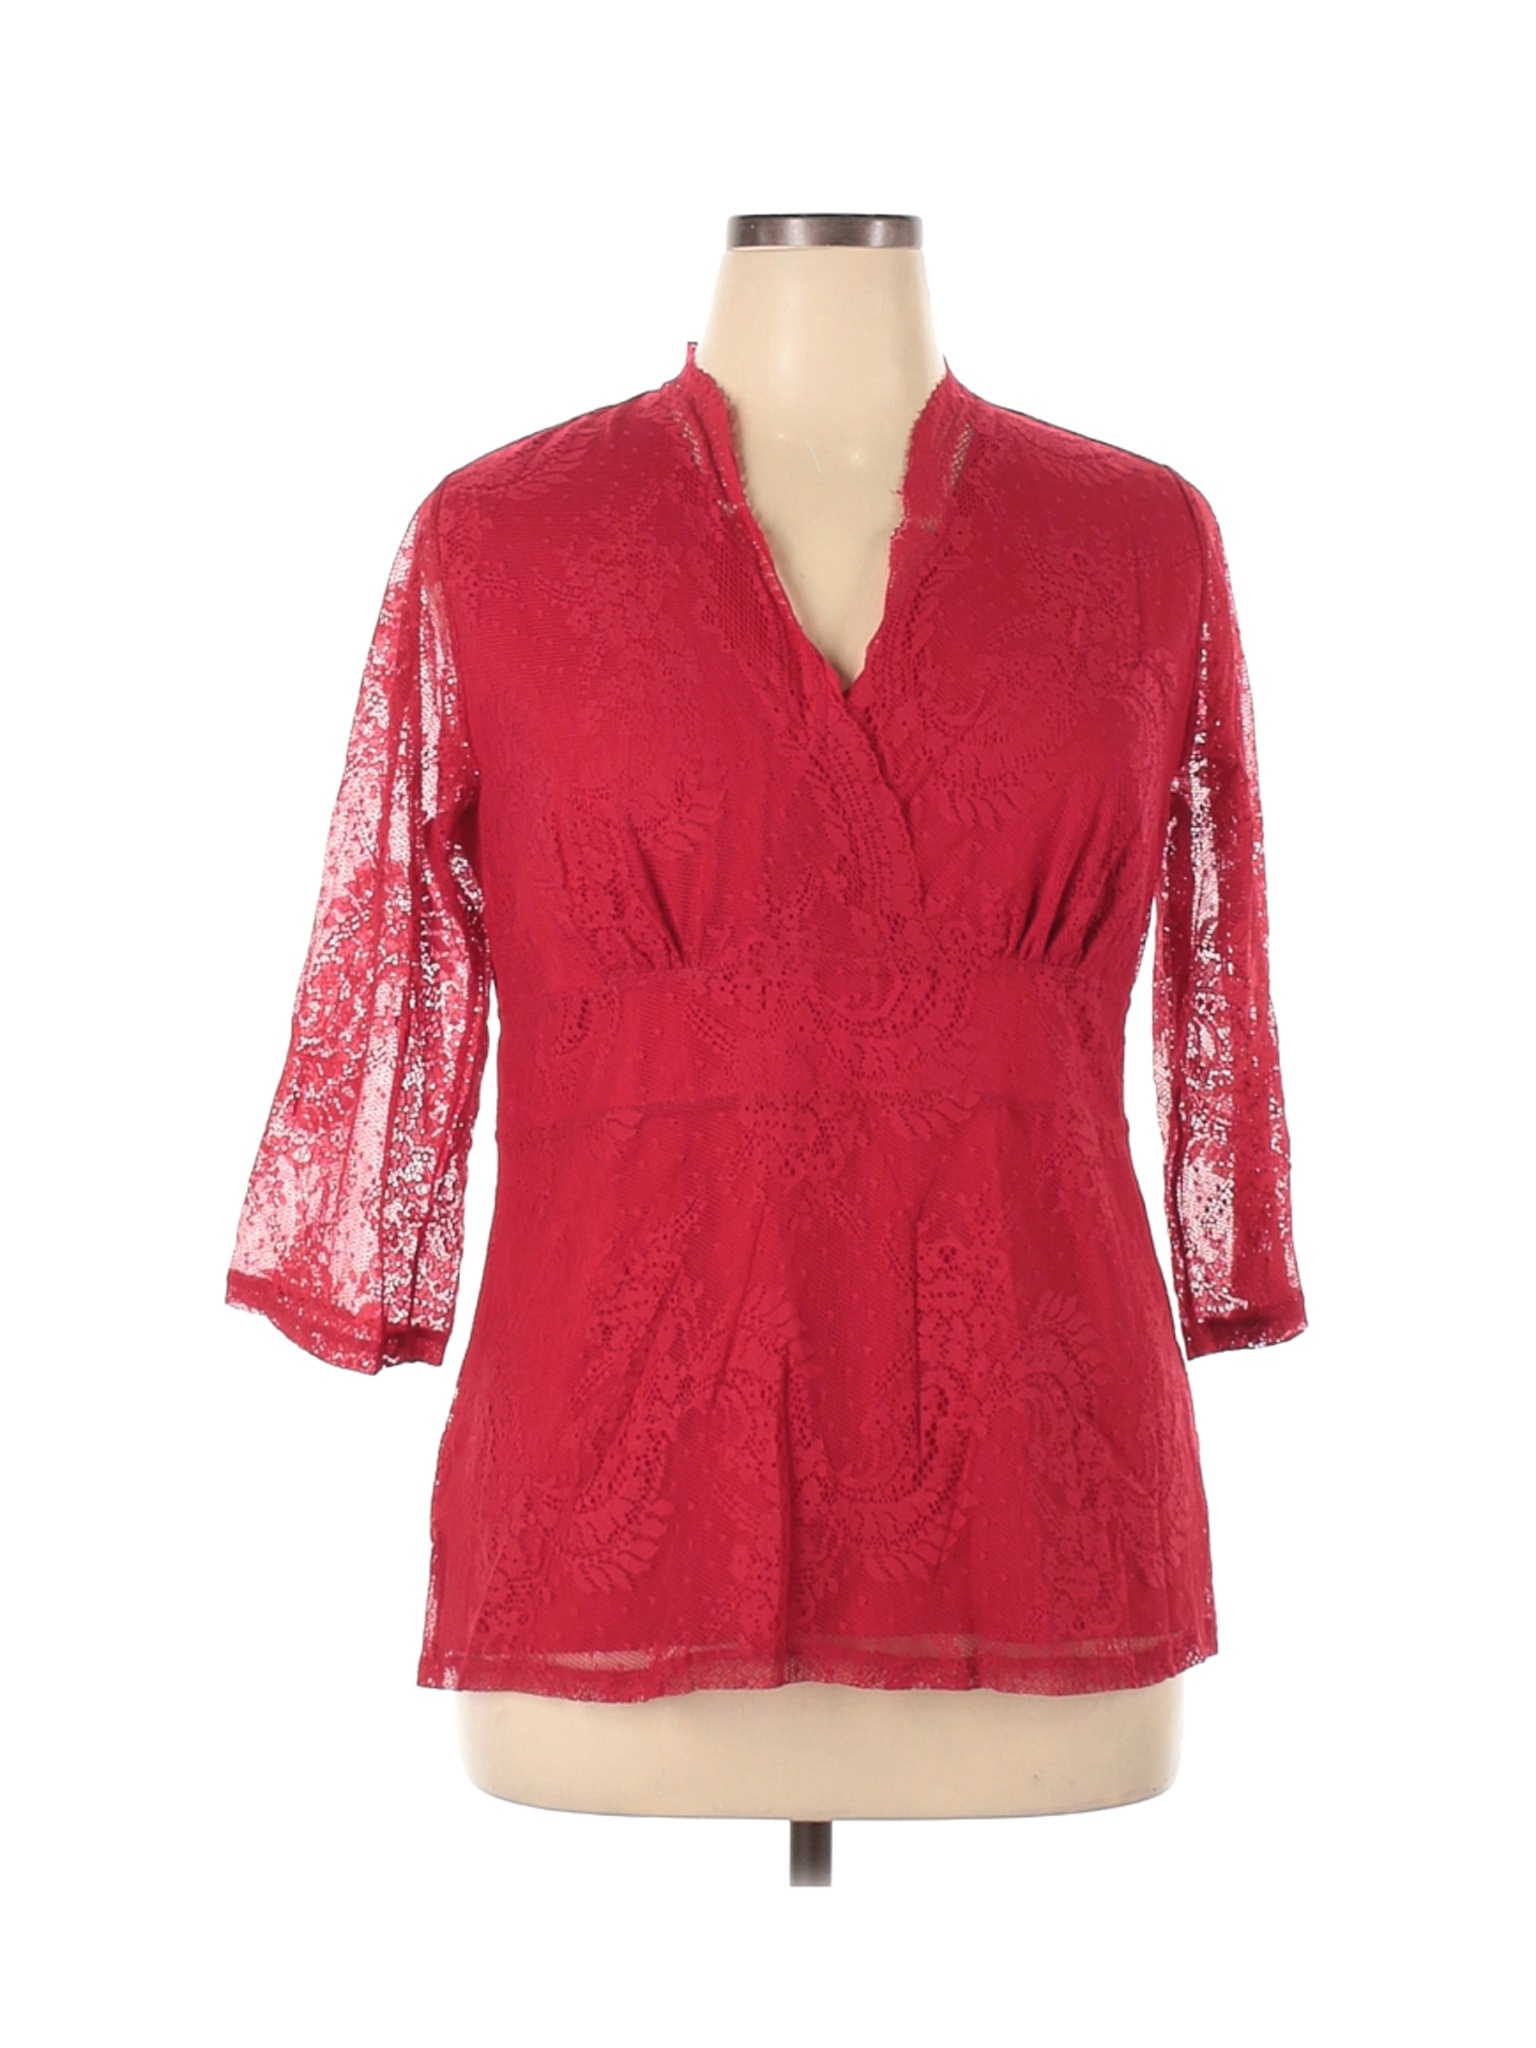 Lane Bryant Women Red 3/4 Sleeve Blouse 14 Plus | eBay